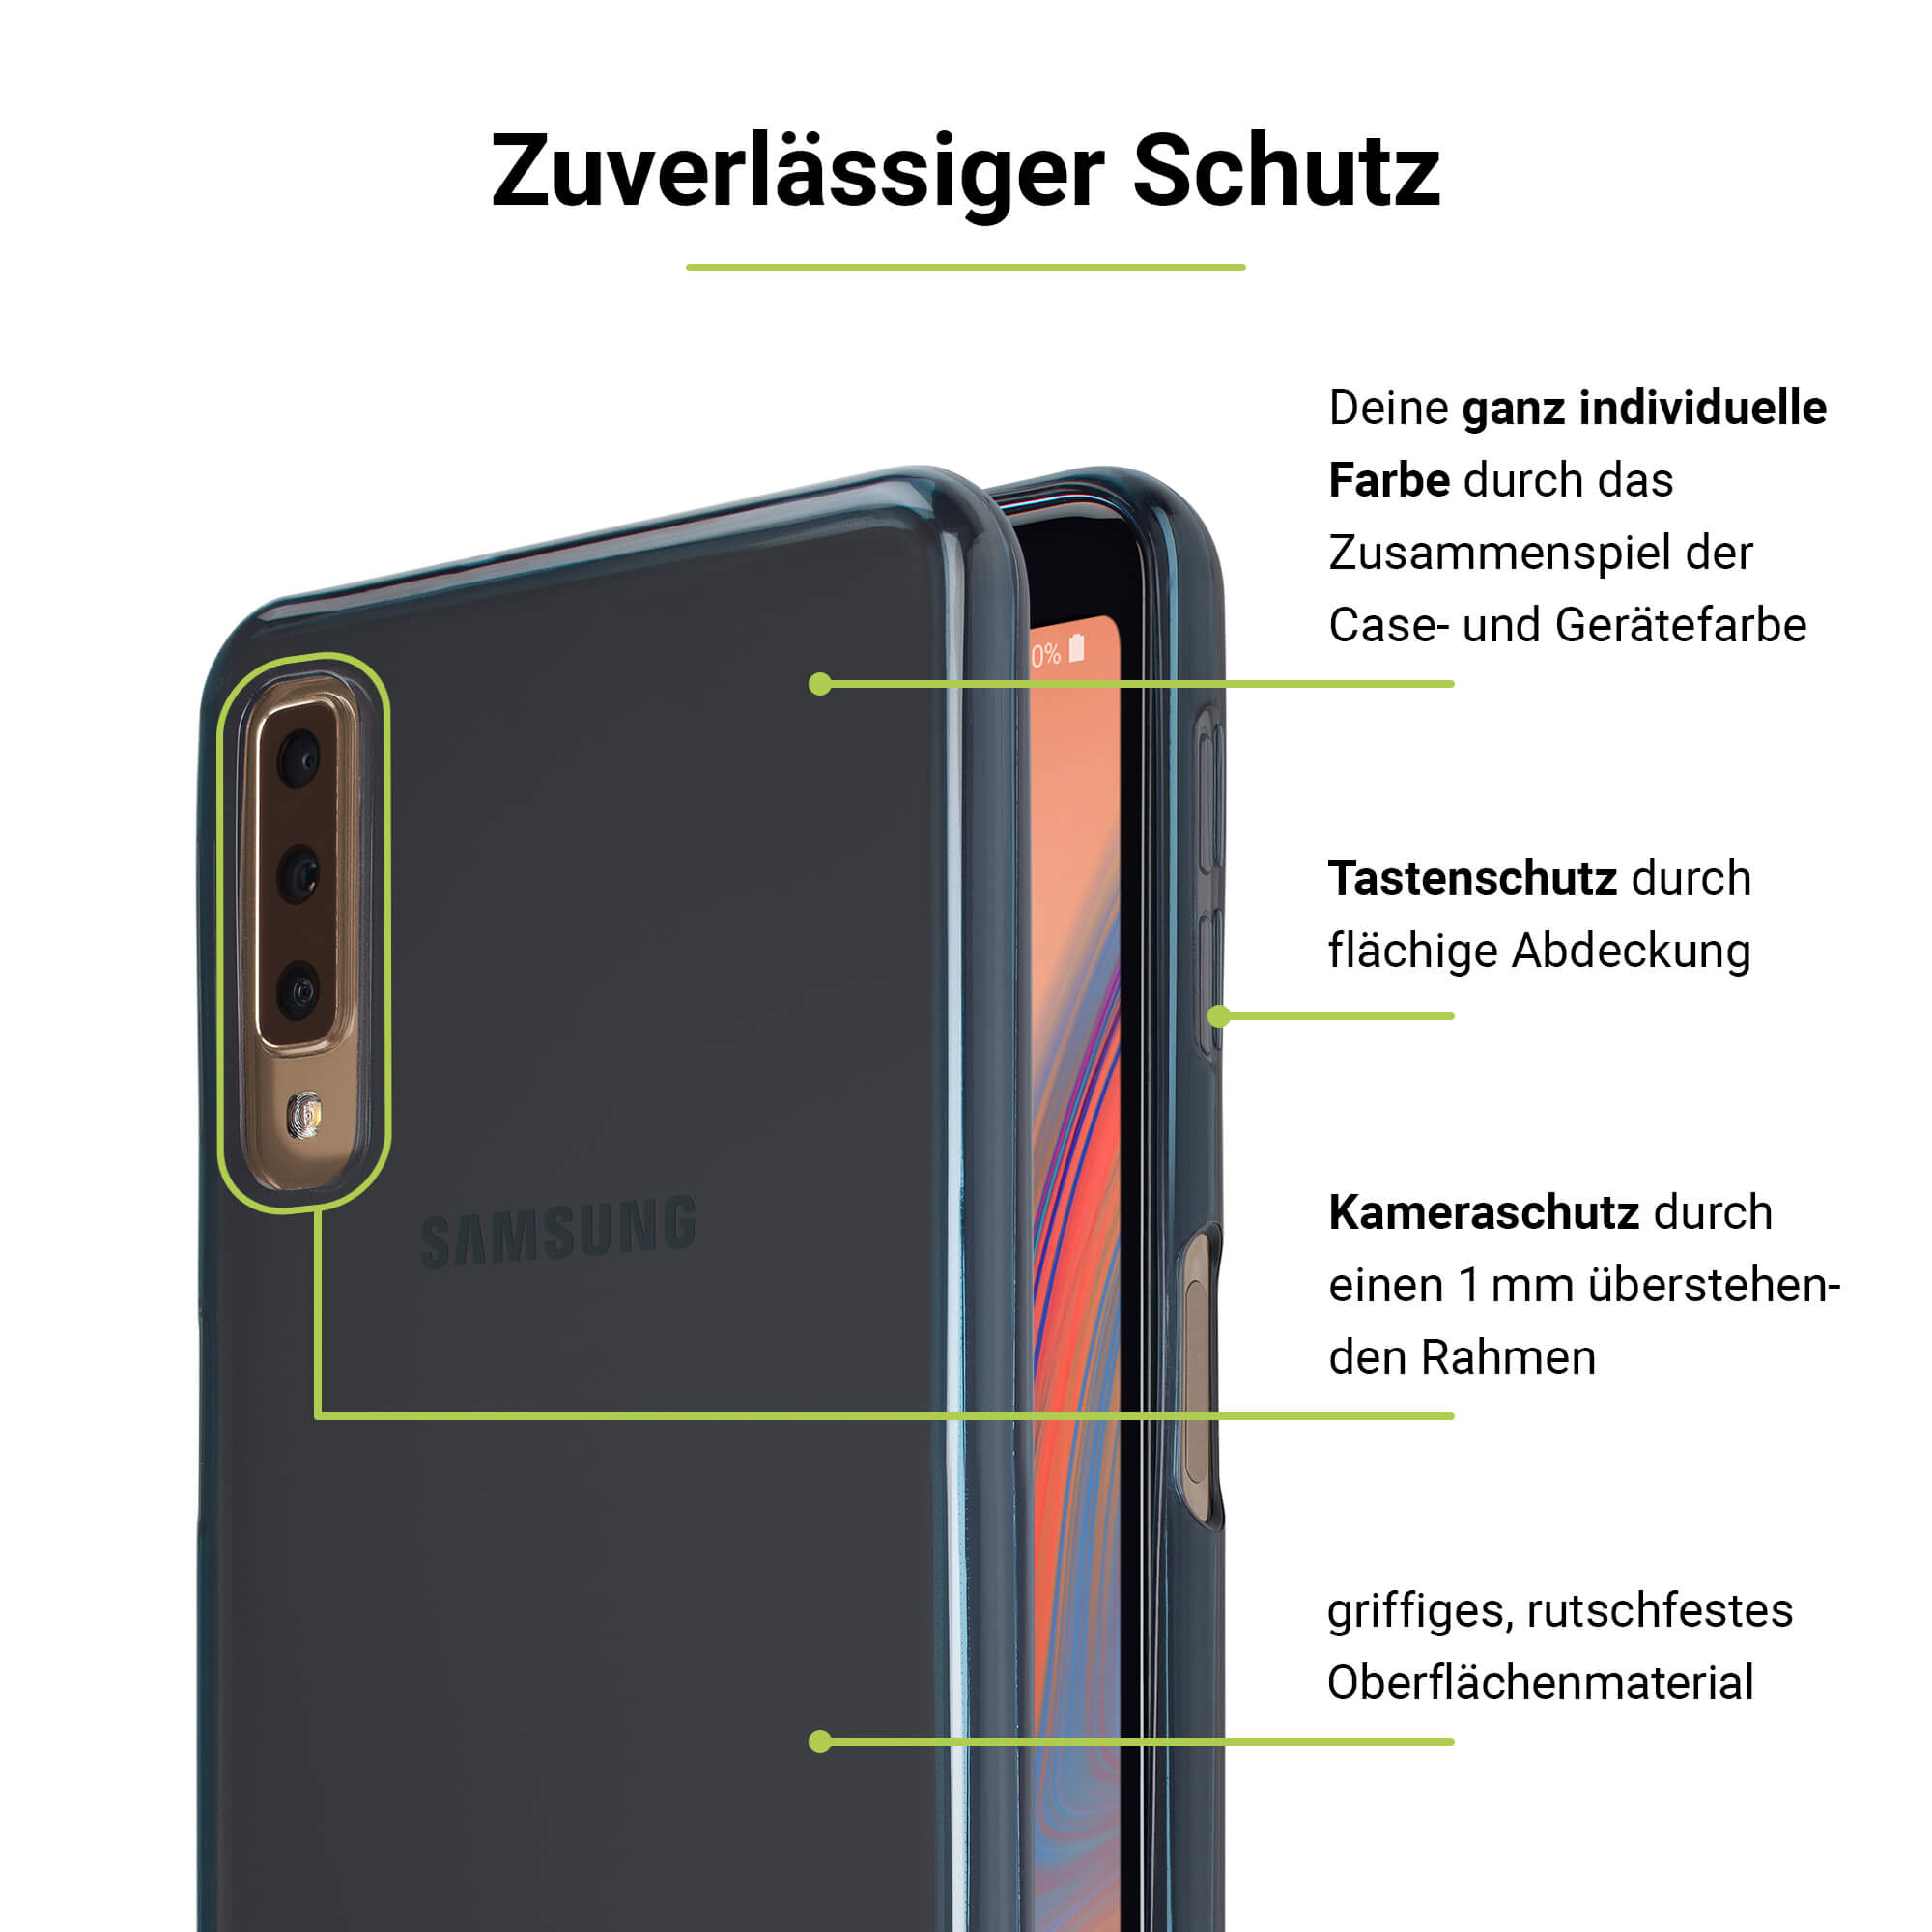 Samsung, ARTWIZZ Backcover, NoCase, (2018), Galaxy Spaceblue A7